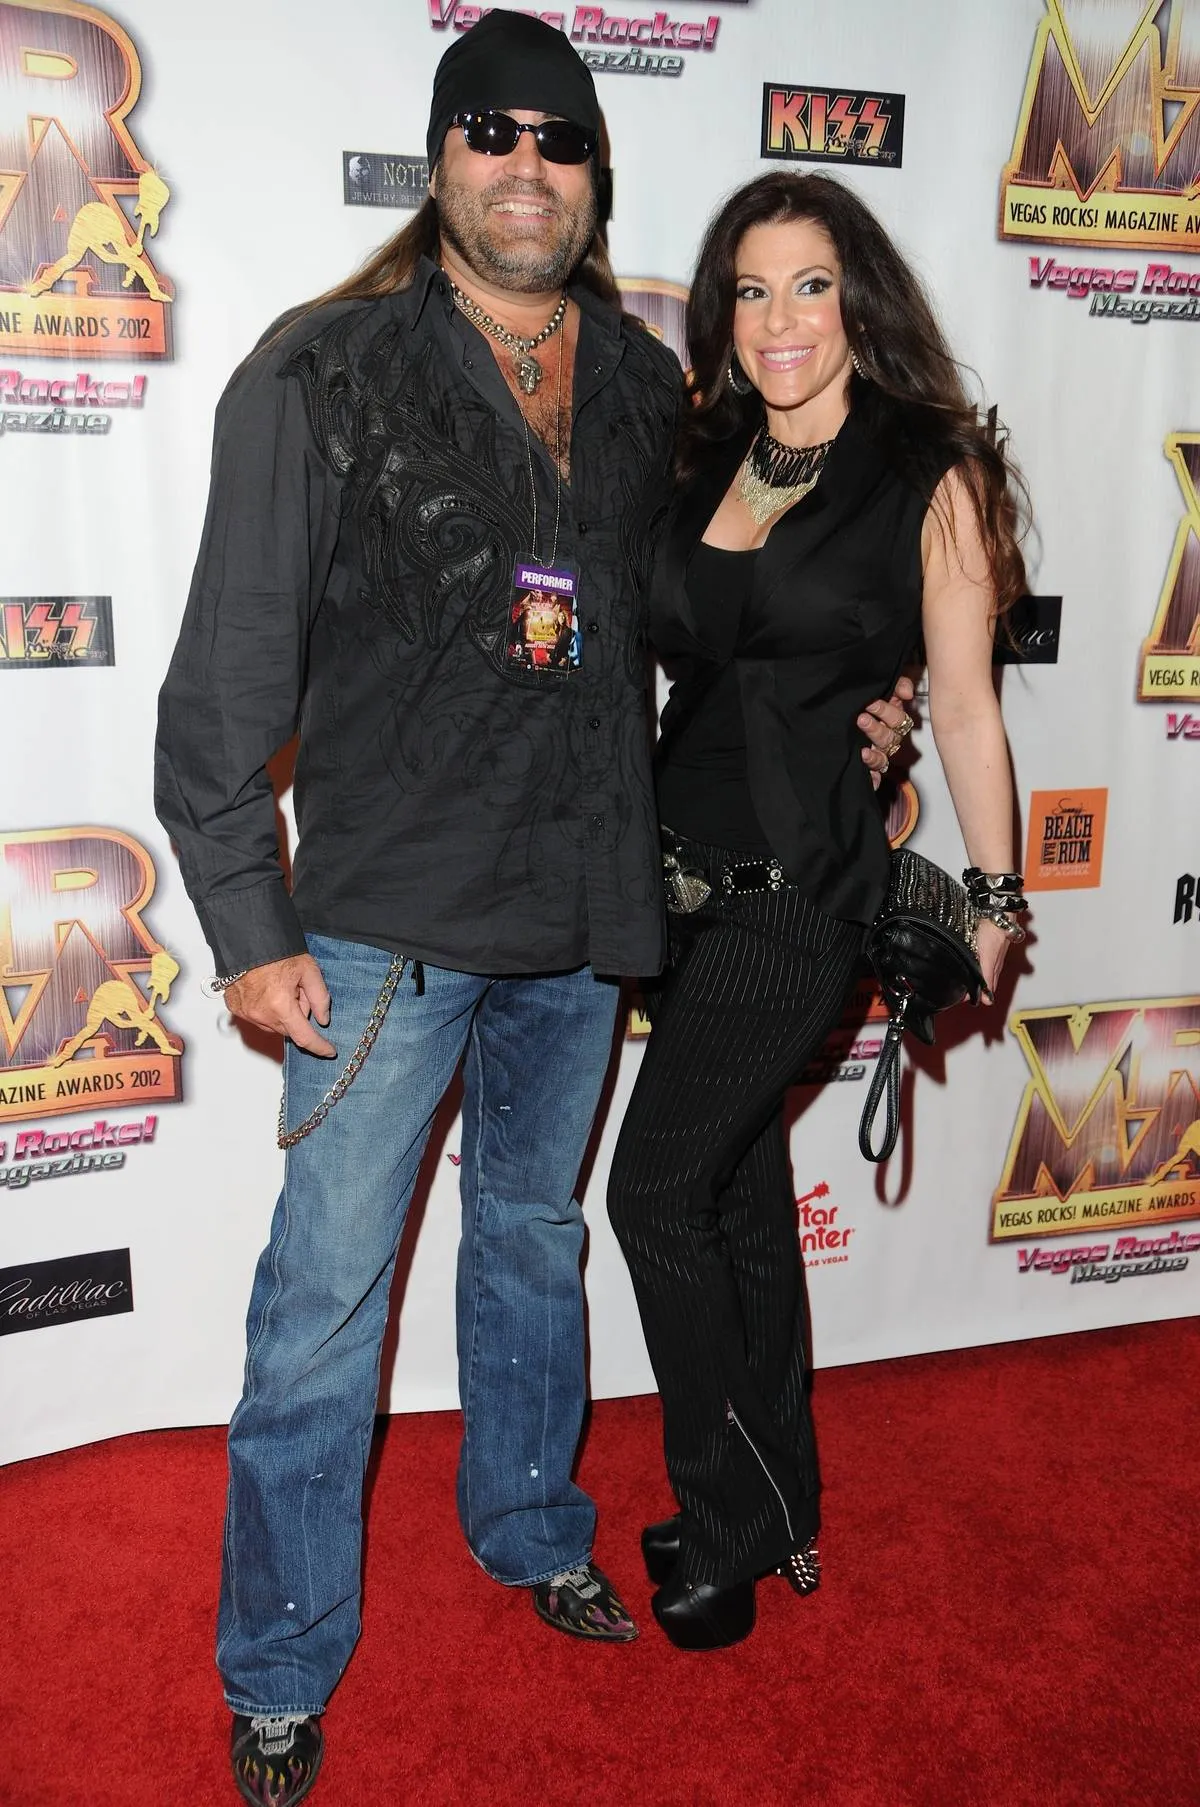 Vegas Rocks! Magazine Awards 2012